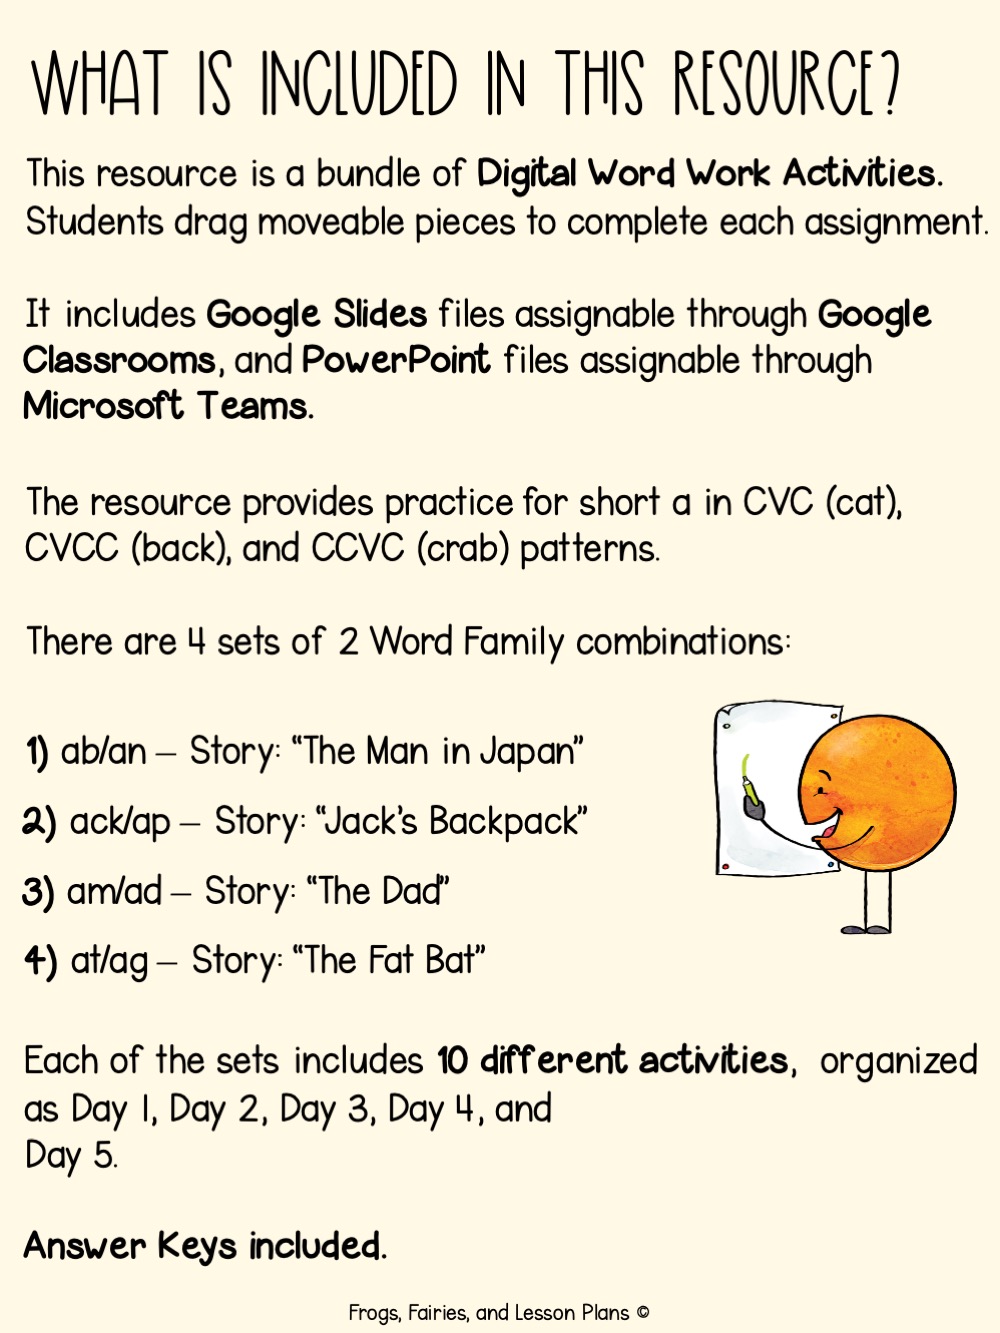 Digital Word Work Activities - CVC, CVCC, and CCVC Words with Short Vowel Sounds